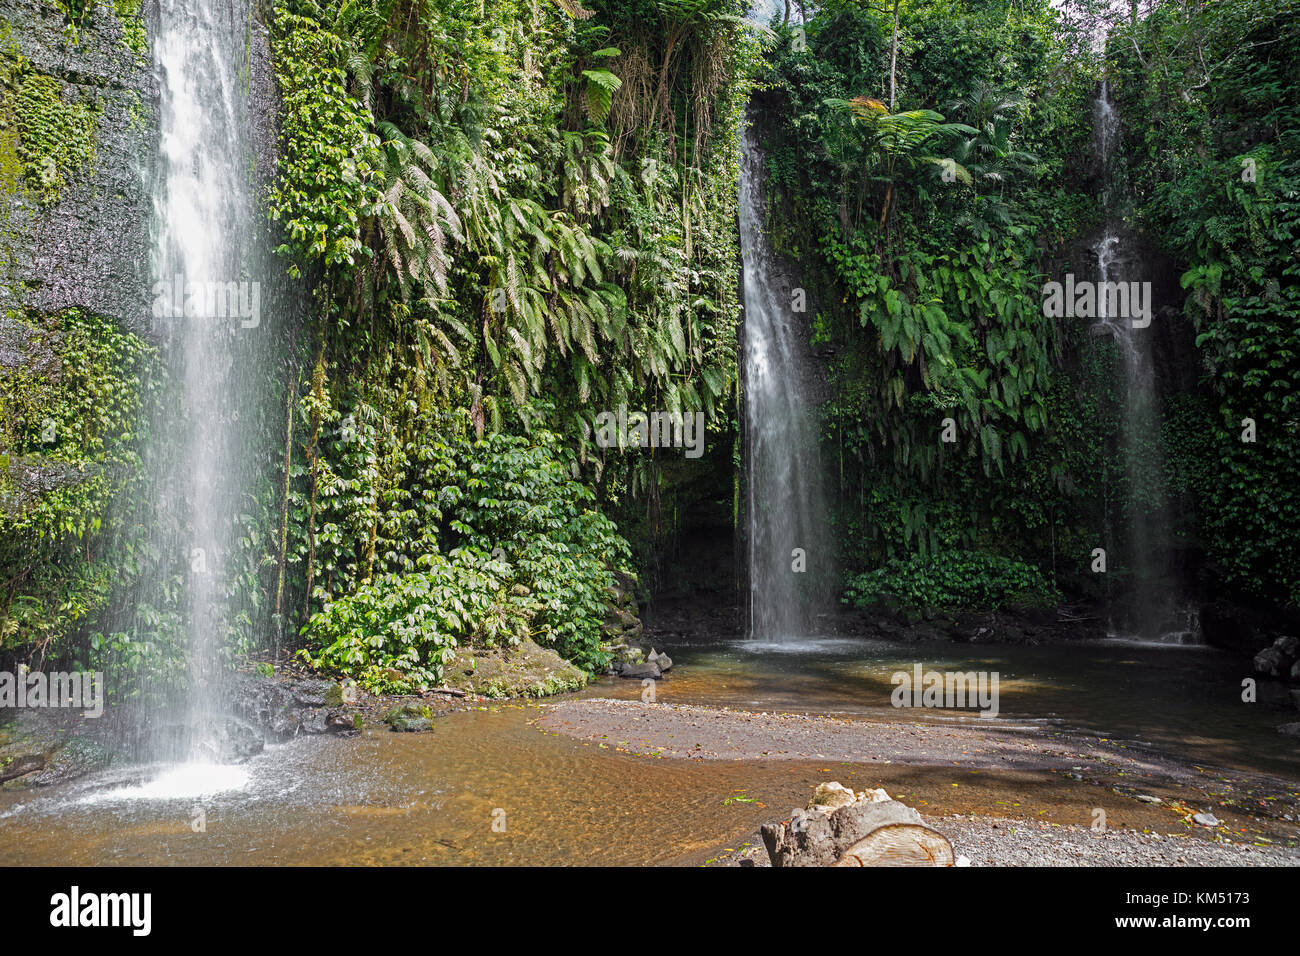 Benang kelambu cascate nella foresta tropicale vicino al villaggio di aik berik, nord batukliang, central lombok, INDONESIA Foto Stock